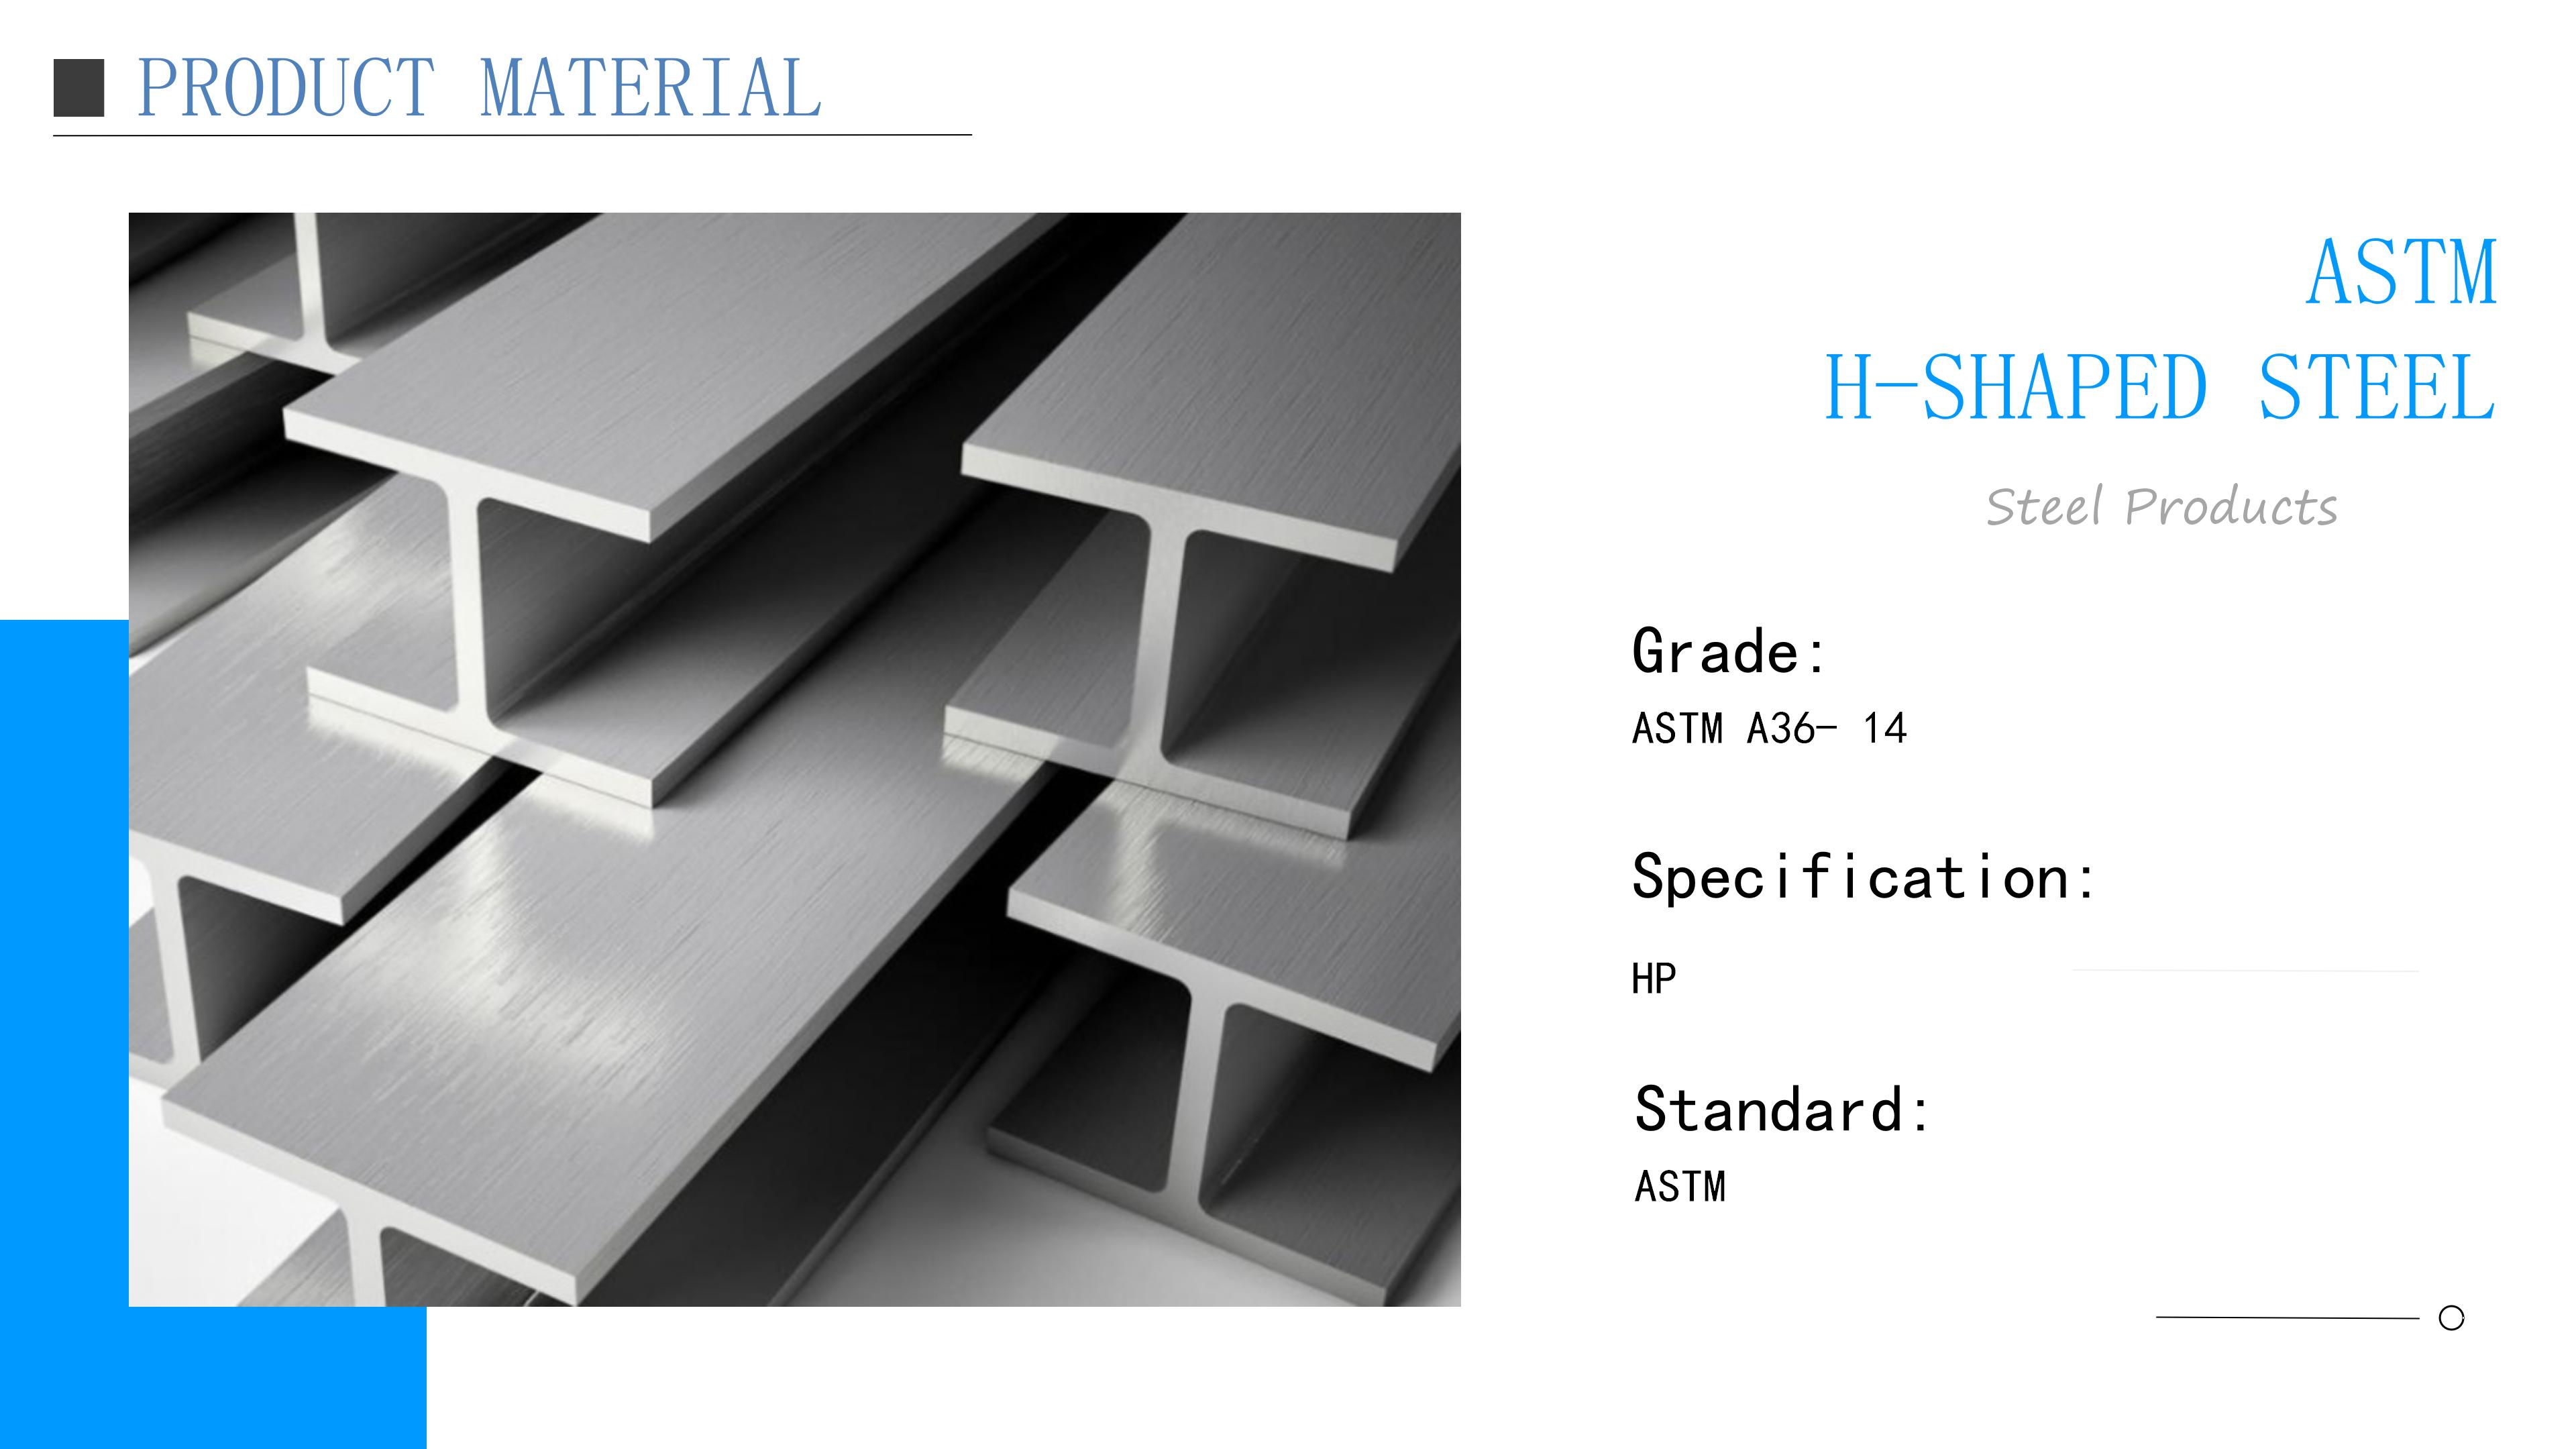 ASTM H-Shaped Steel (2)